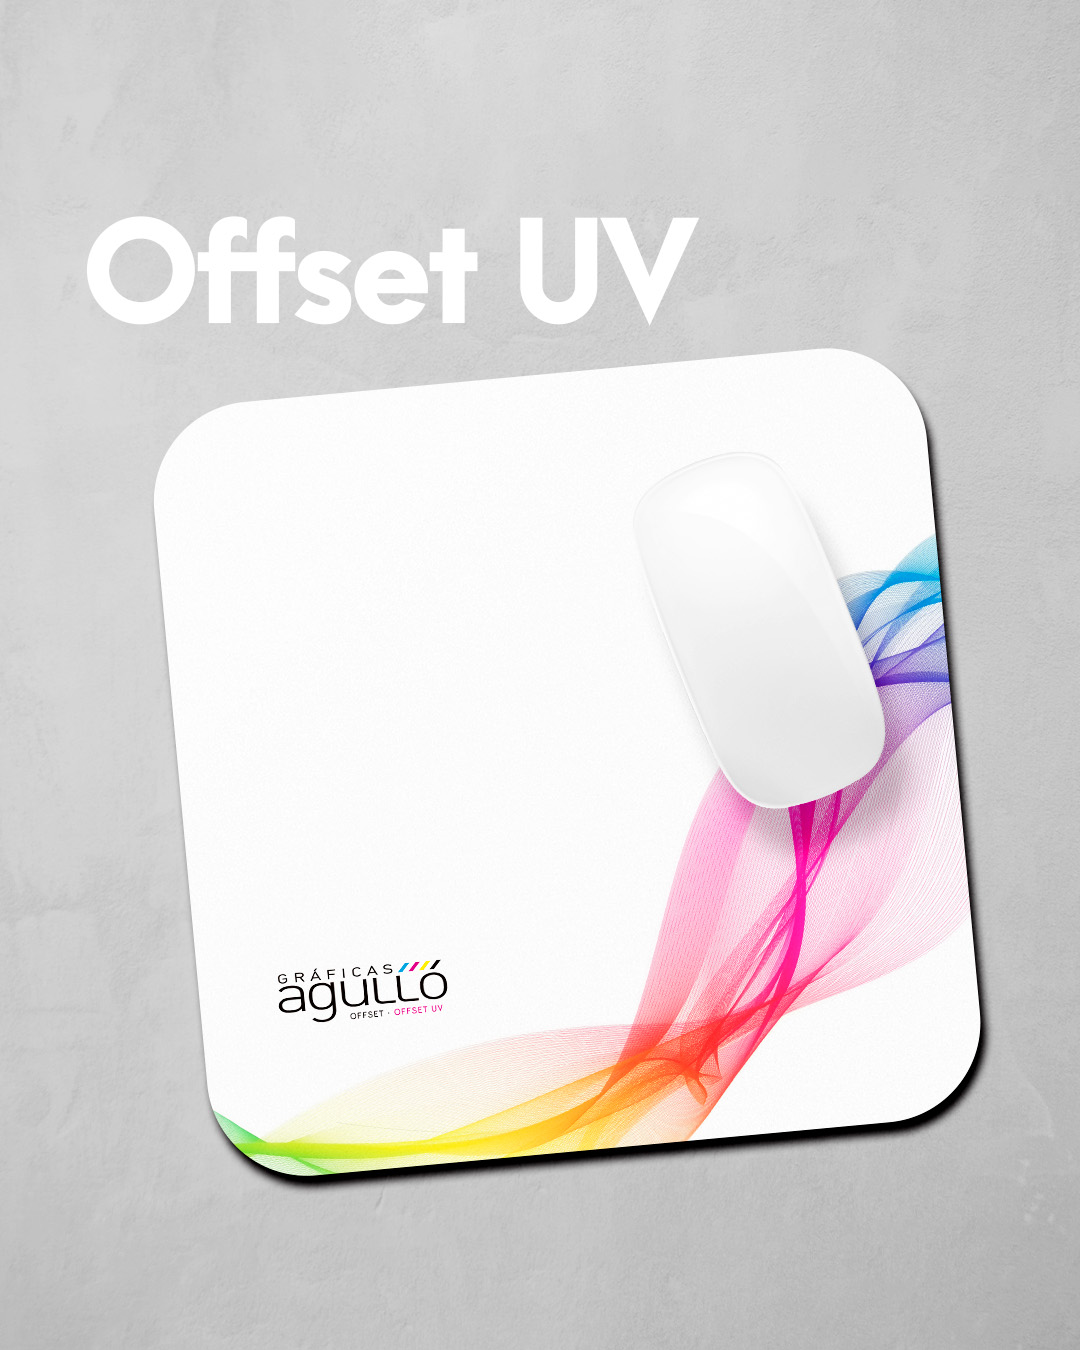 Impresión Offset UV